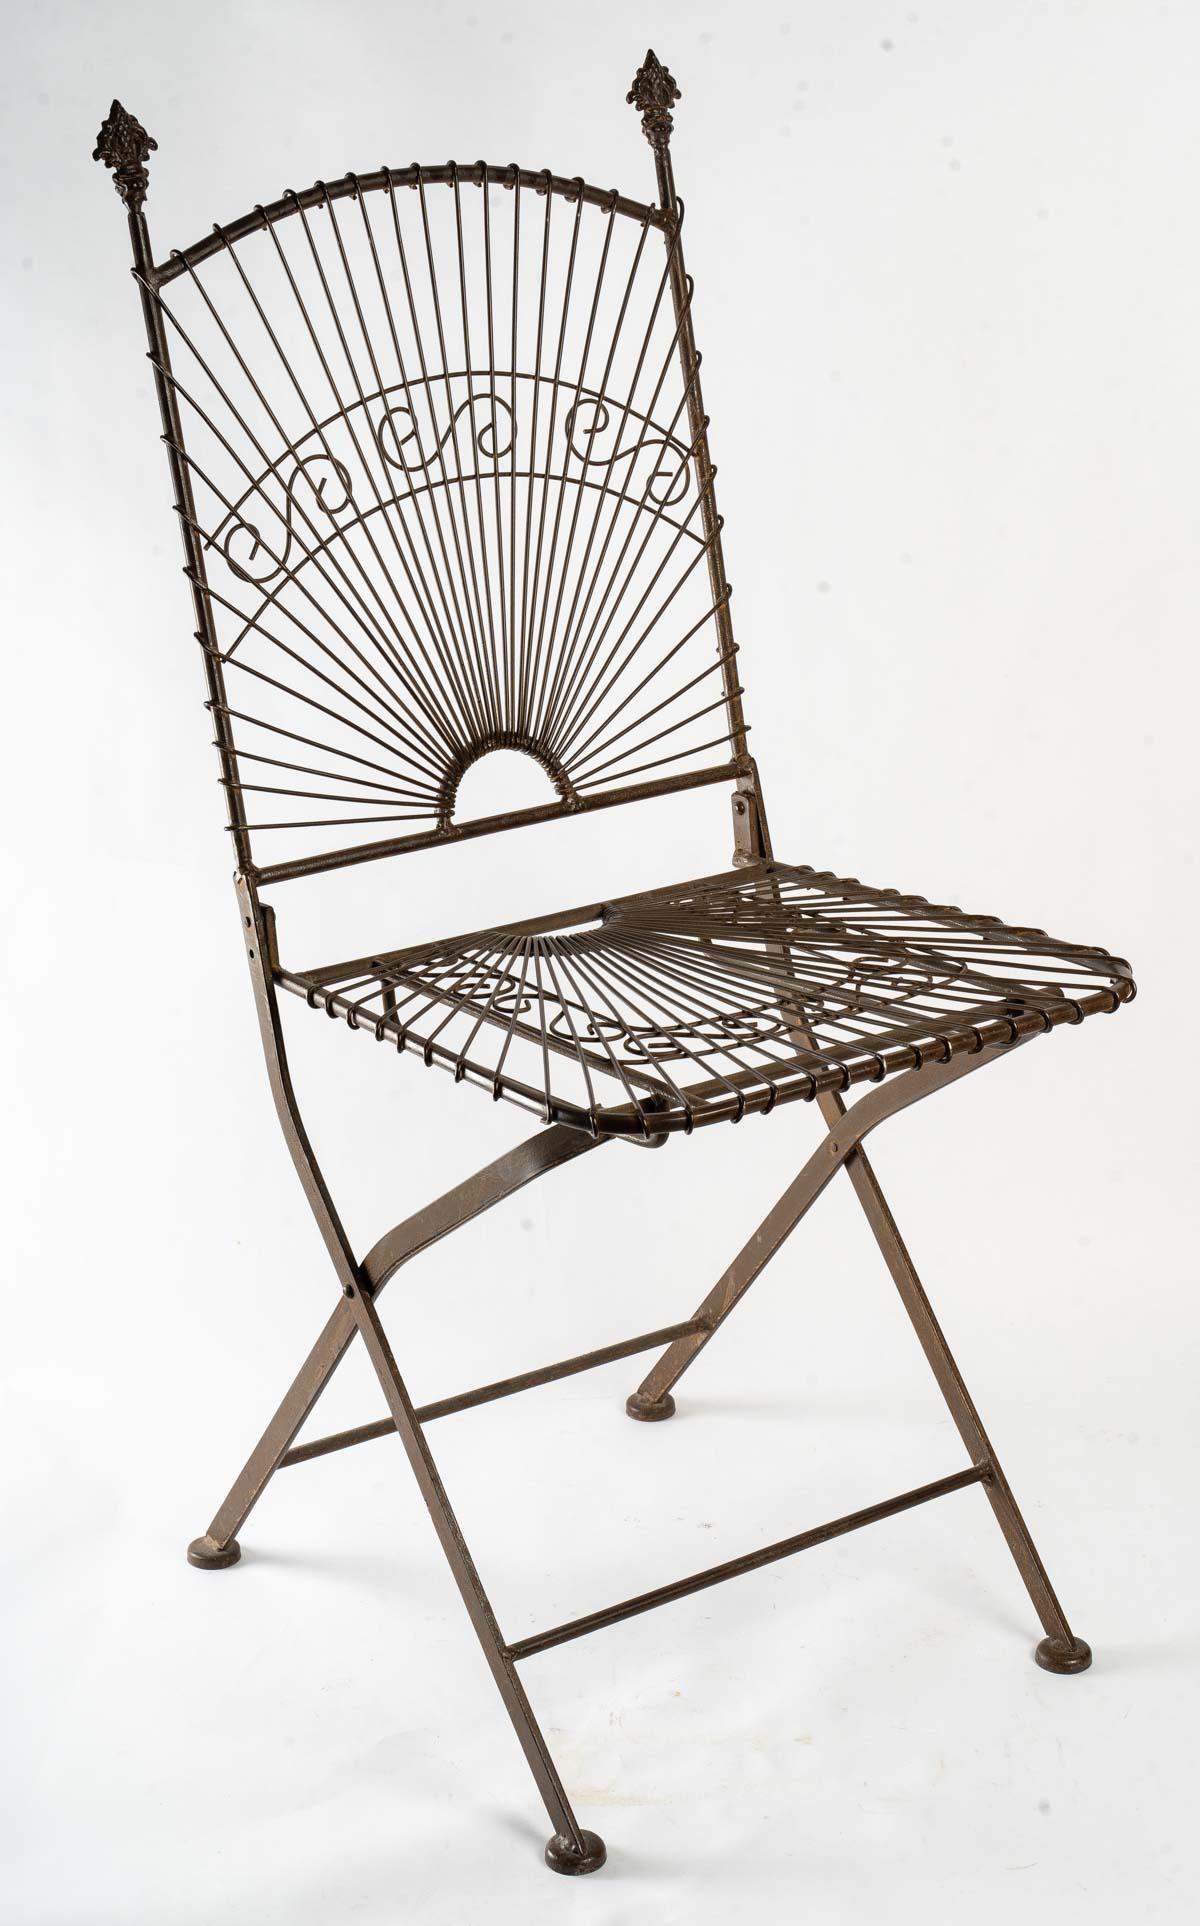 Pair of metal chairs, modern work, 20th century.
Measures: H: 93 cm, W: 38 cm, D: 40 cm.